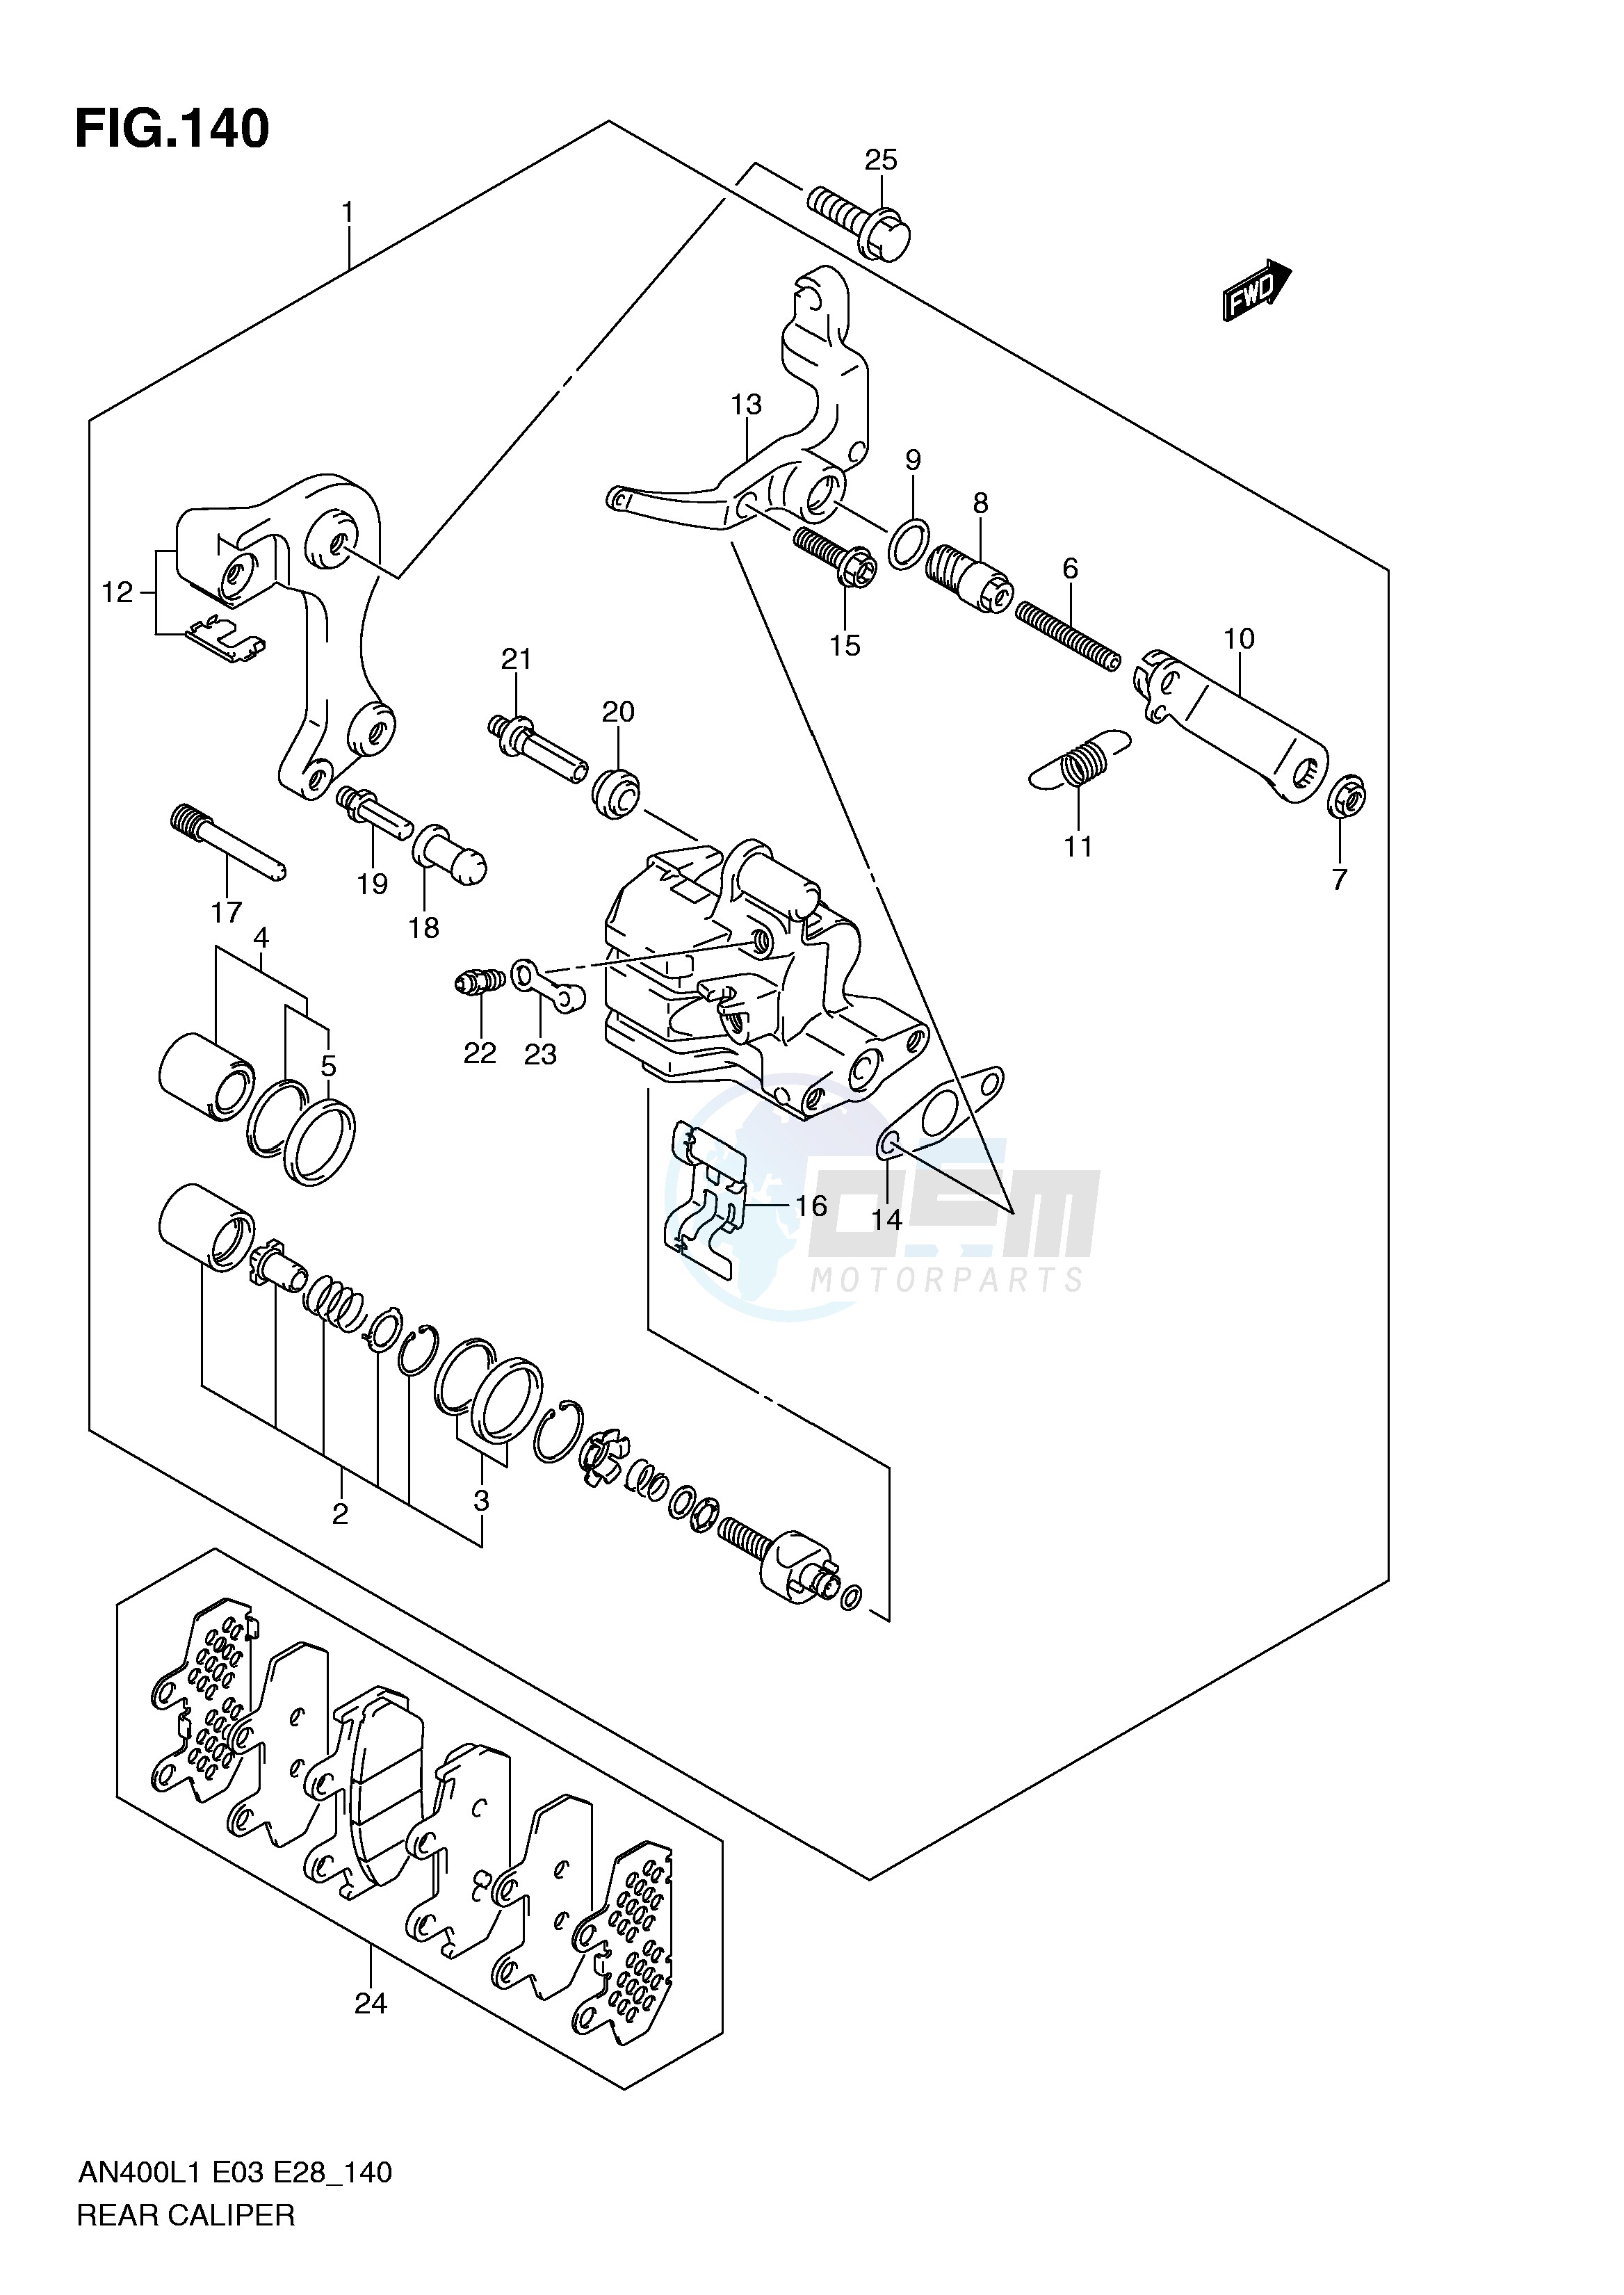 REAR CALIPER (AN400L1 E33) blueprint